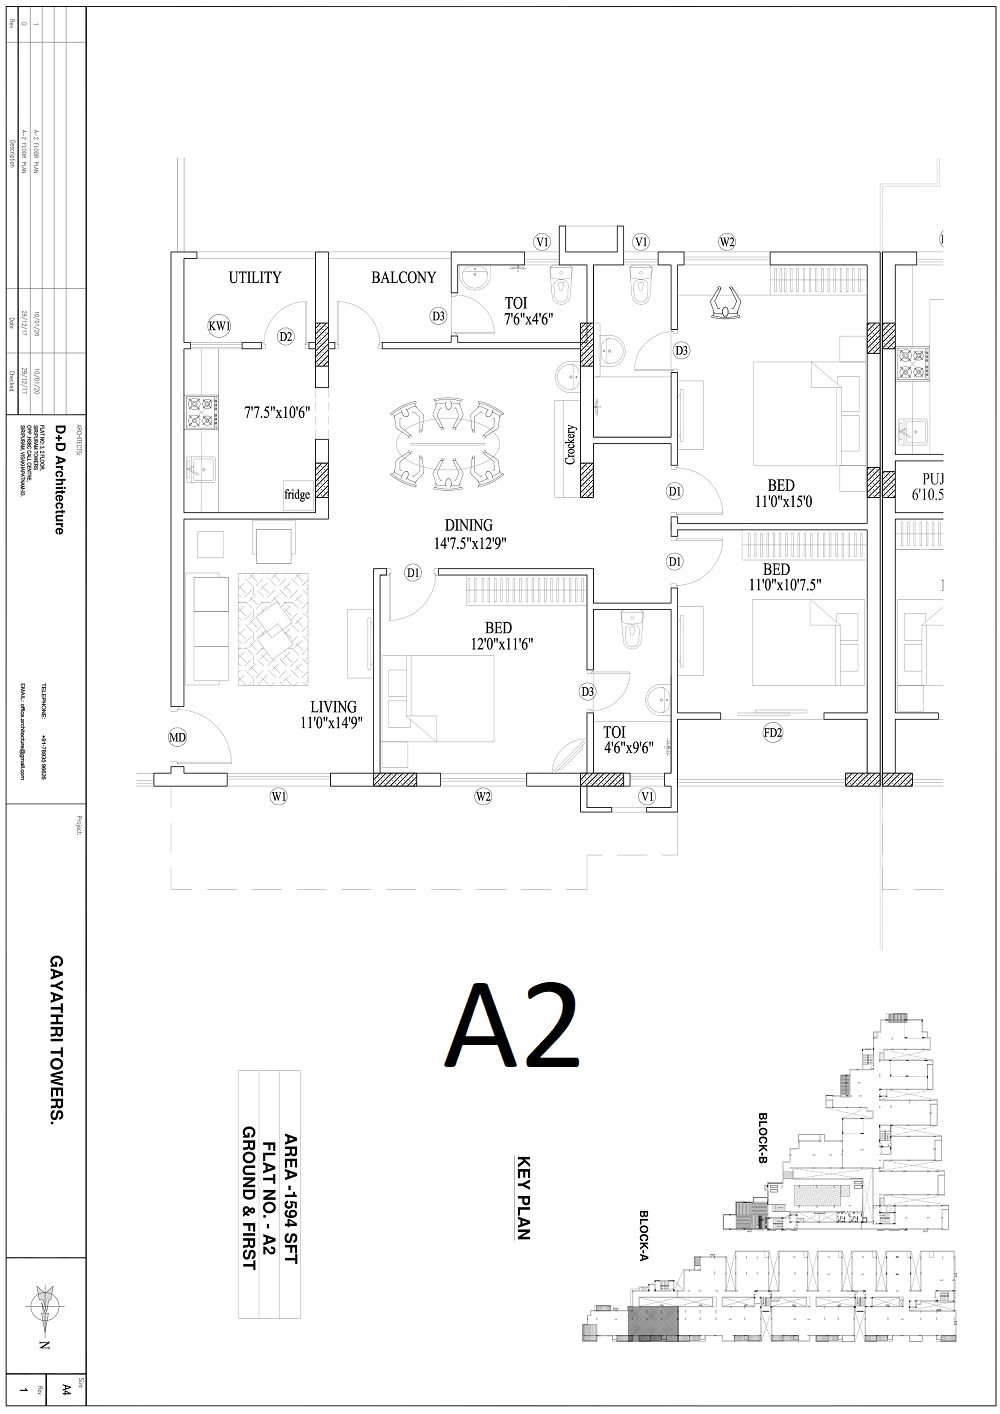 A2 - Floor Plan